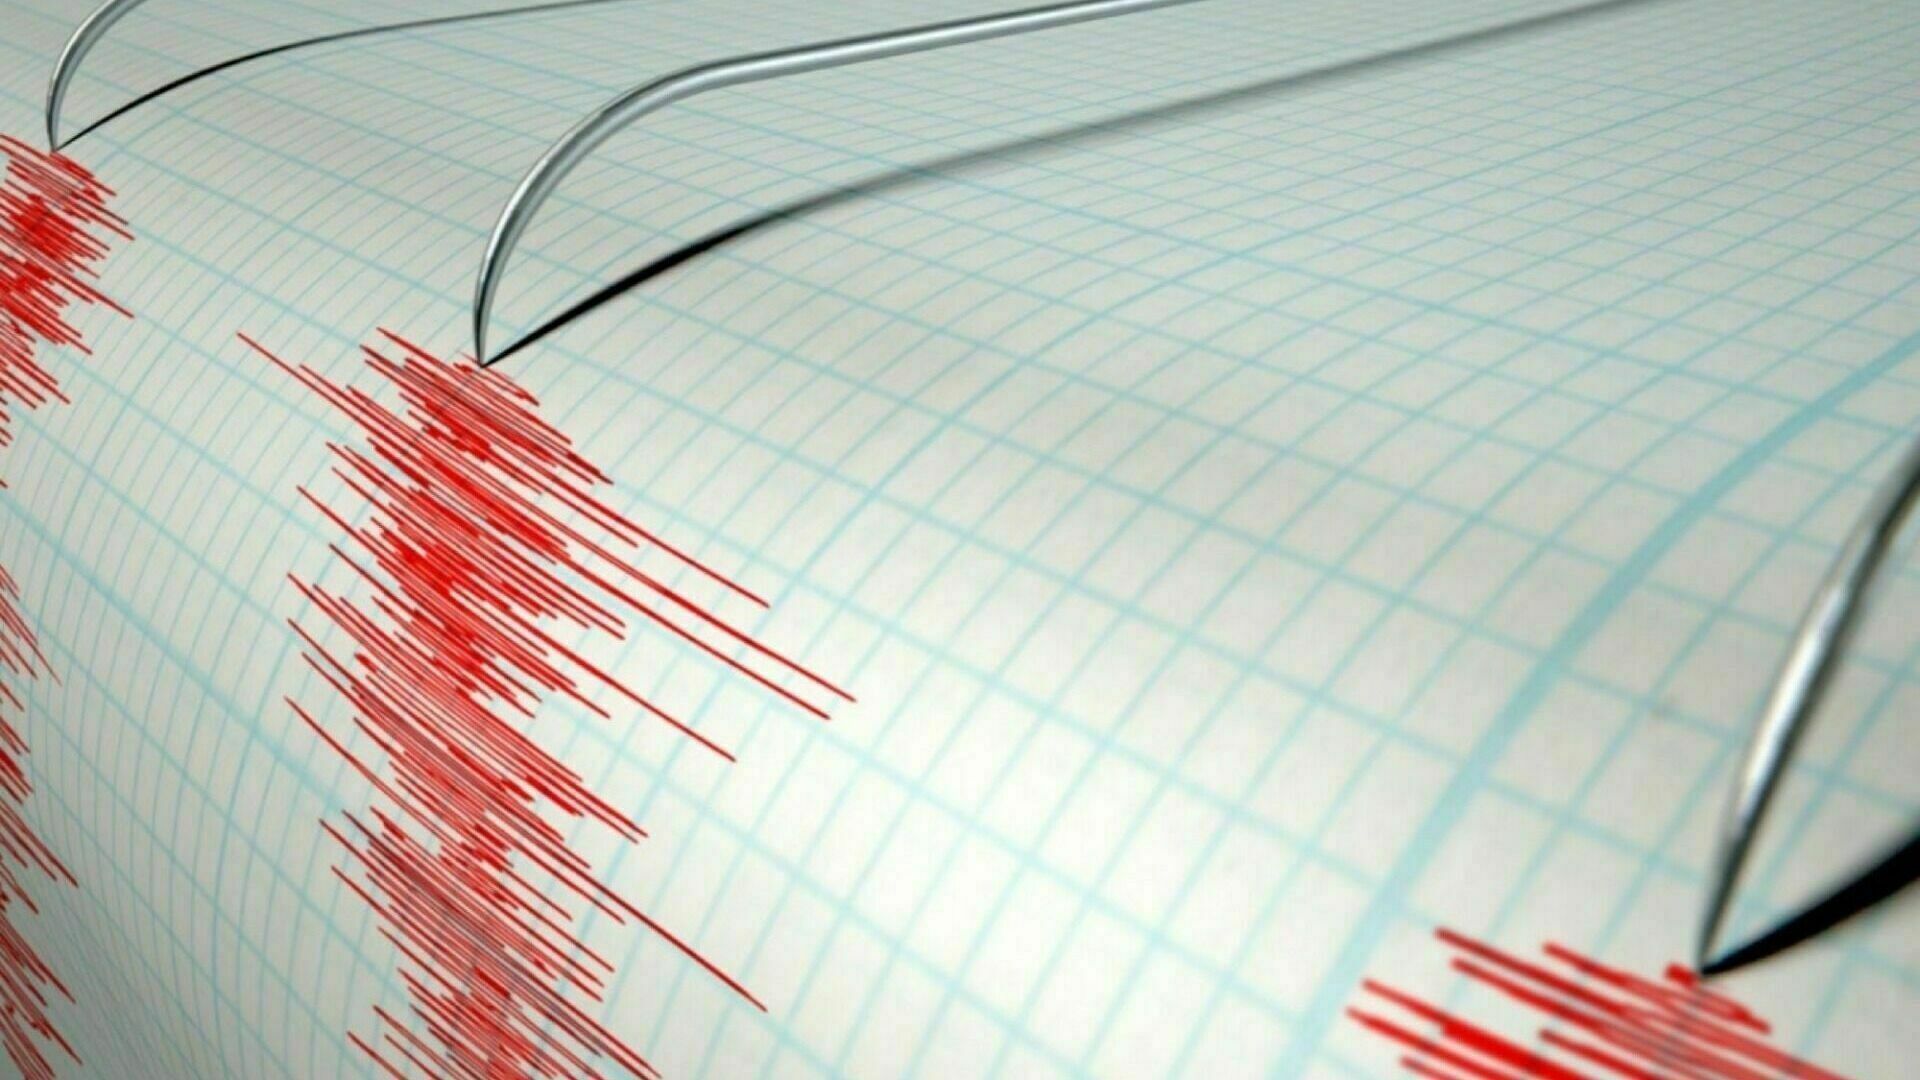 An earthquake of magnitude 5.5 occurred near the Kuril Islands